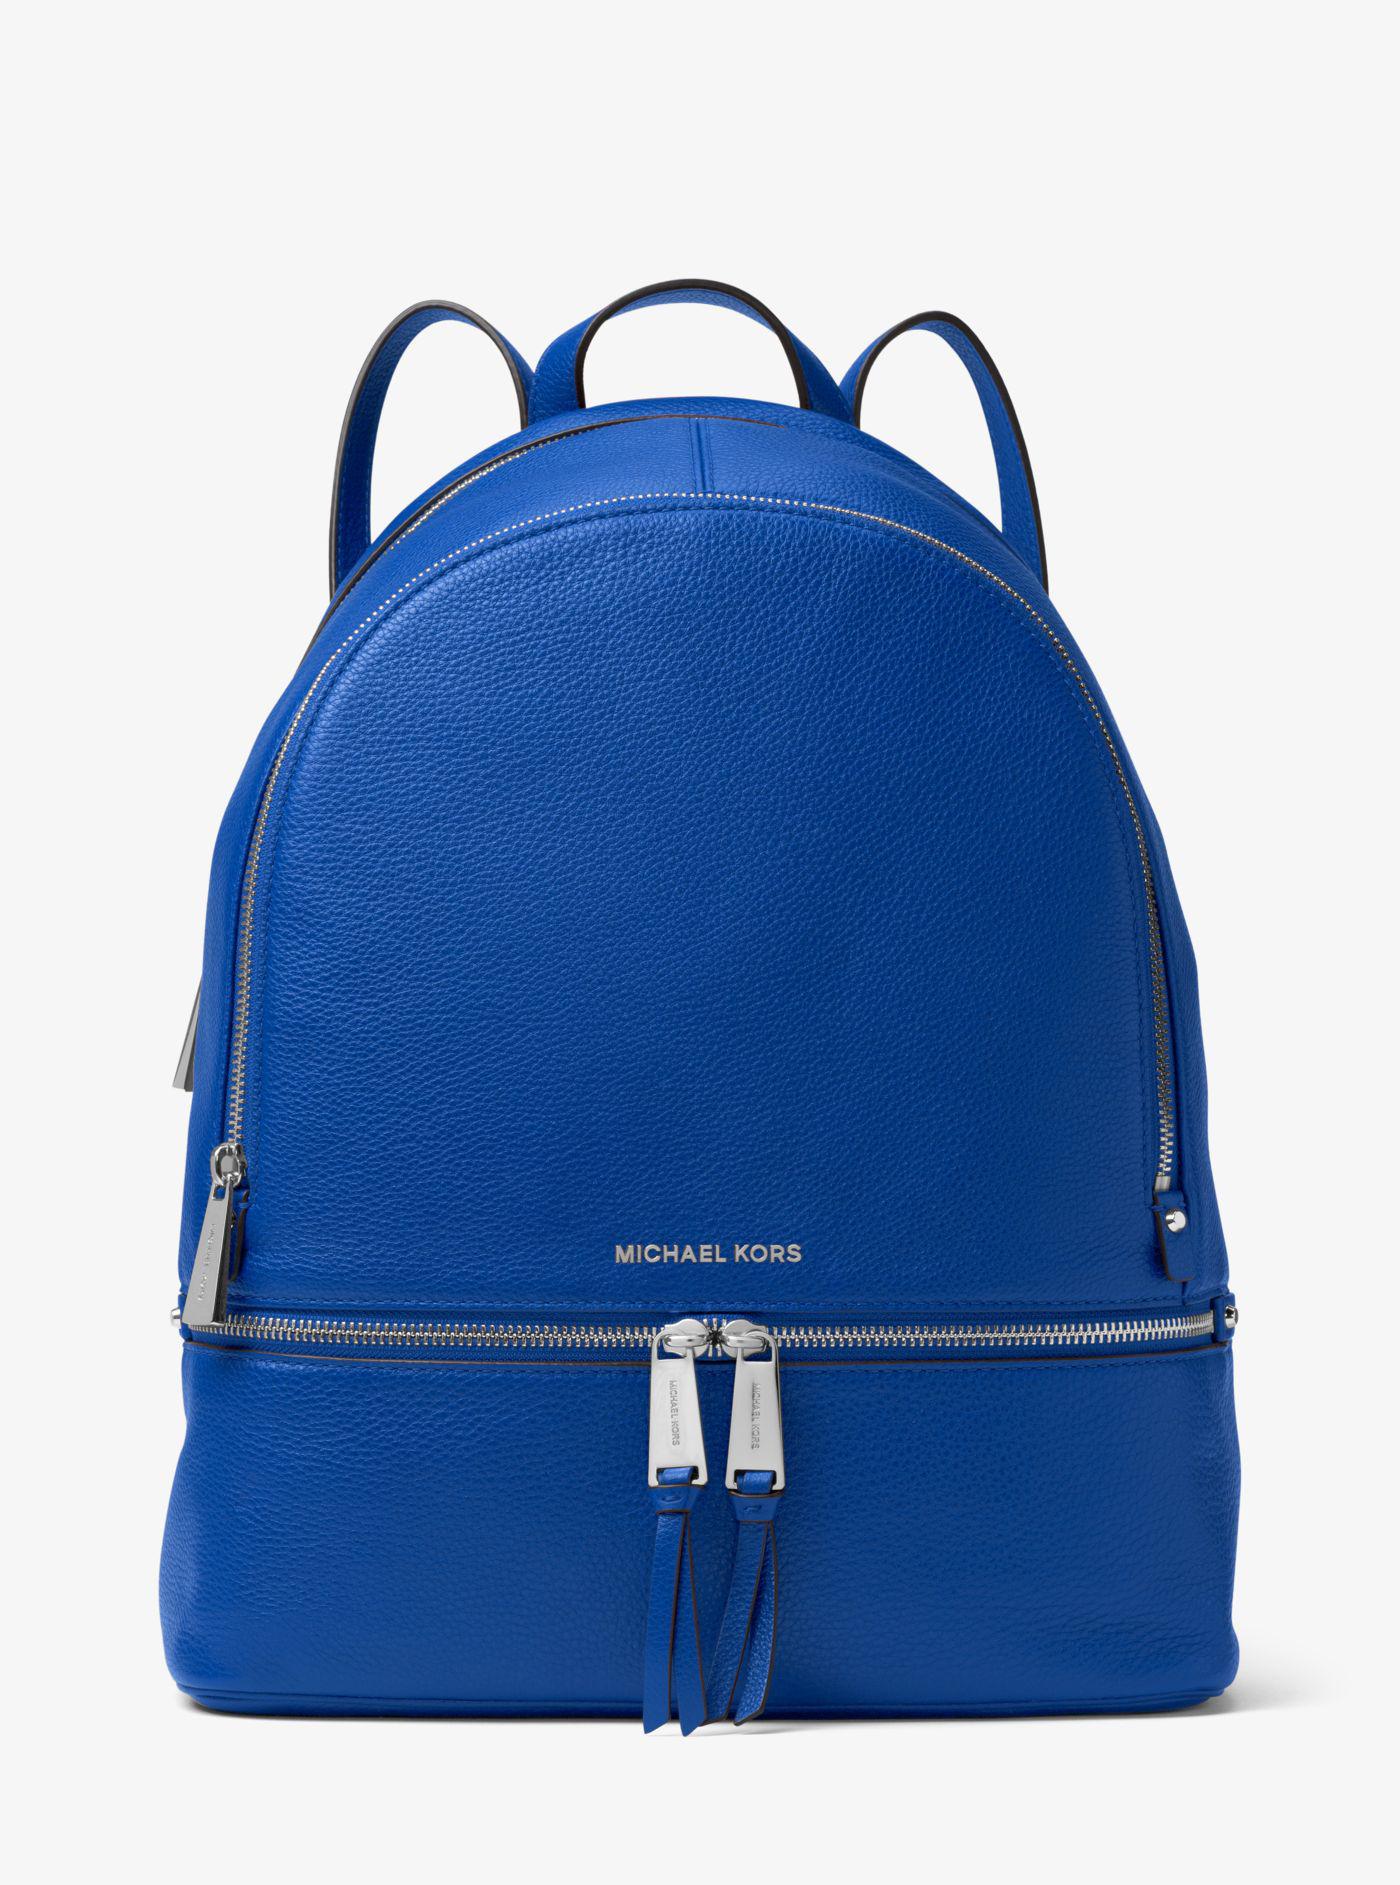 Aprender acerca 50+ imagen michael kors blue backpack - Abzlocal.mx